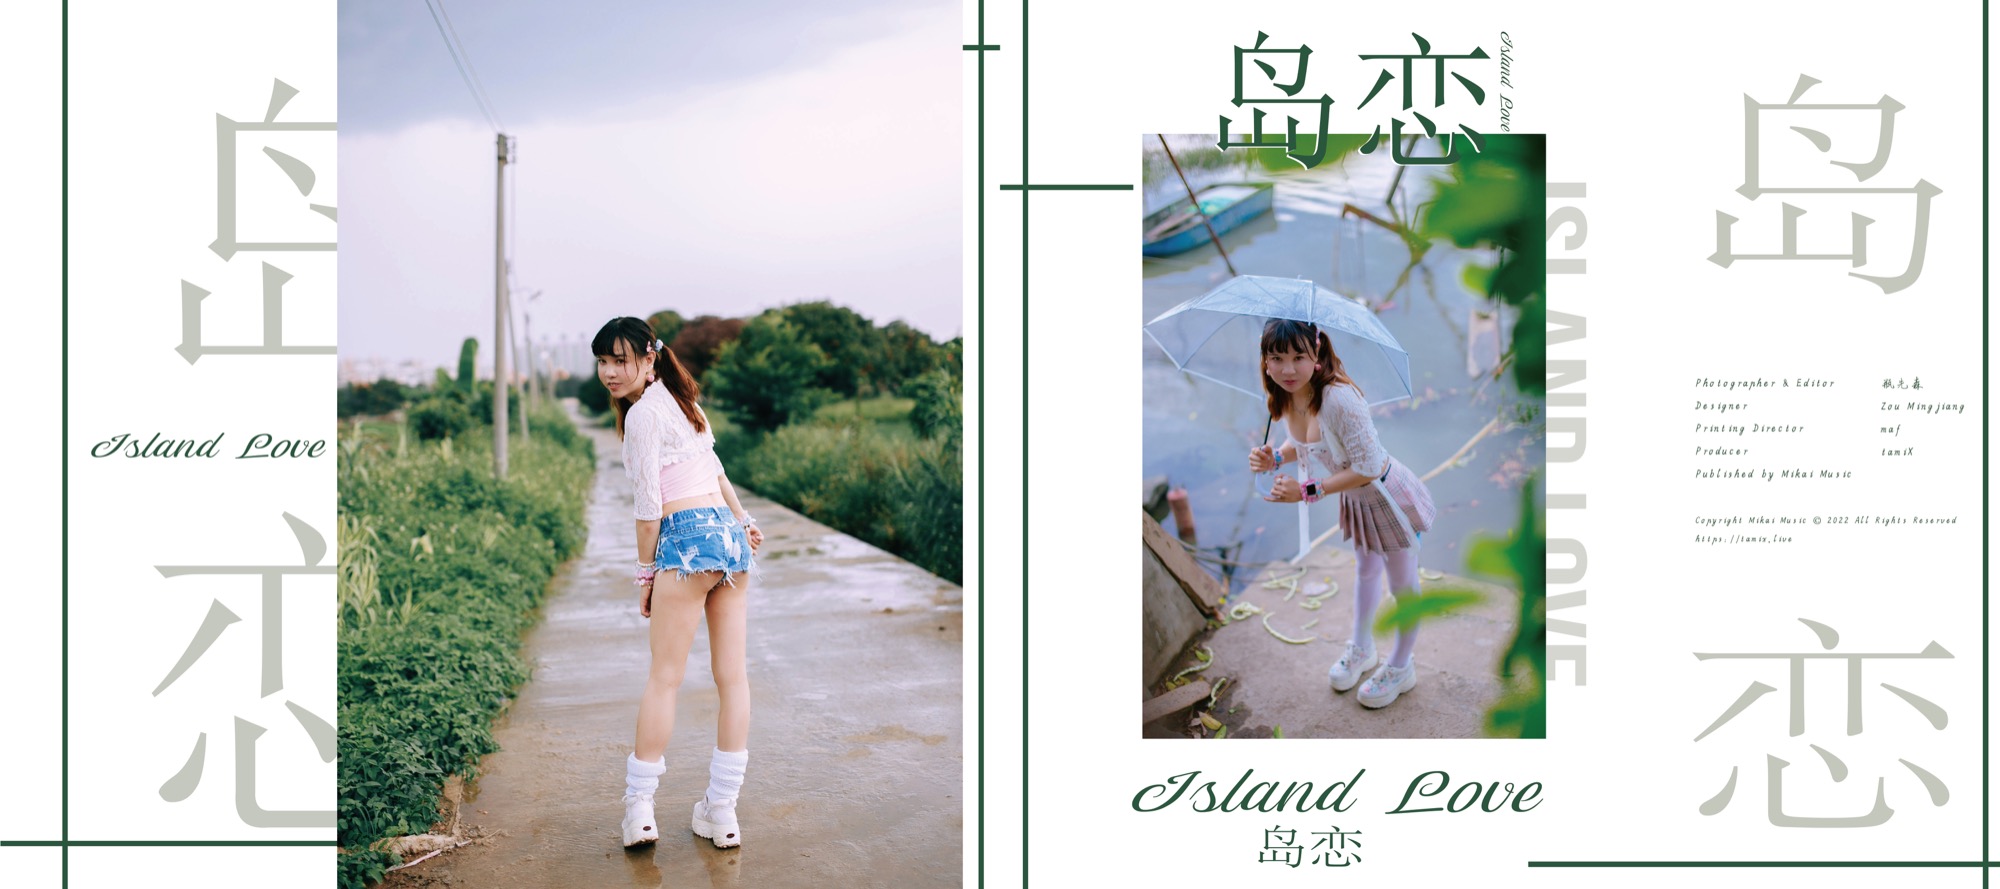 🌠 Photo Book: Island Love